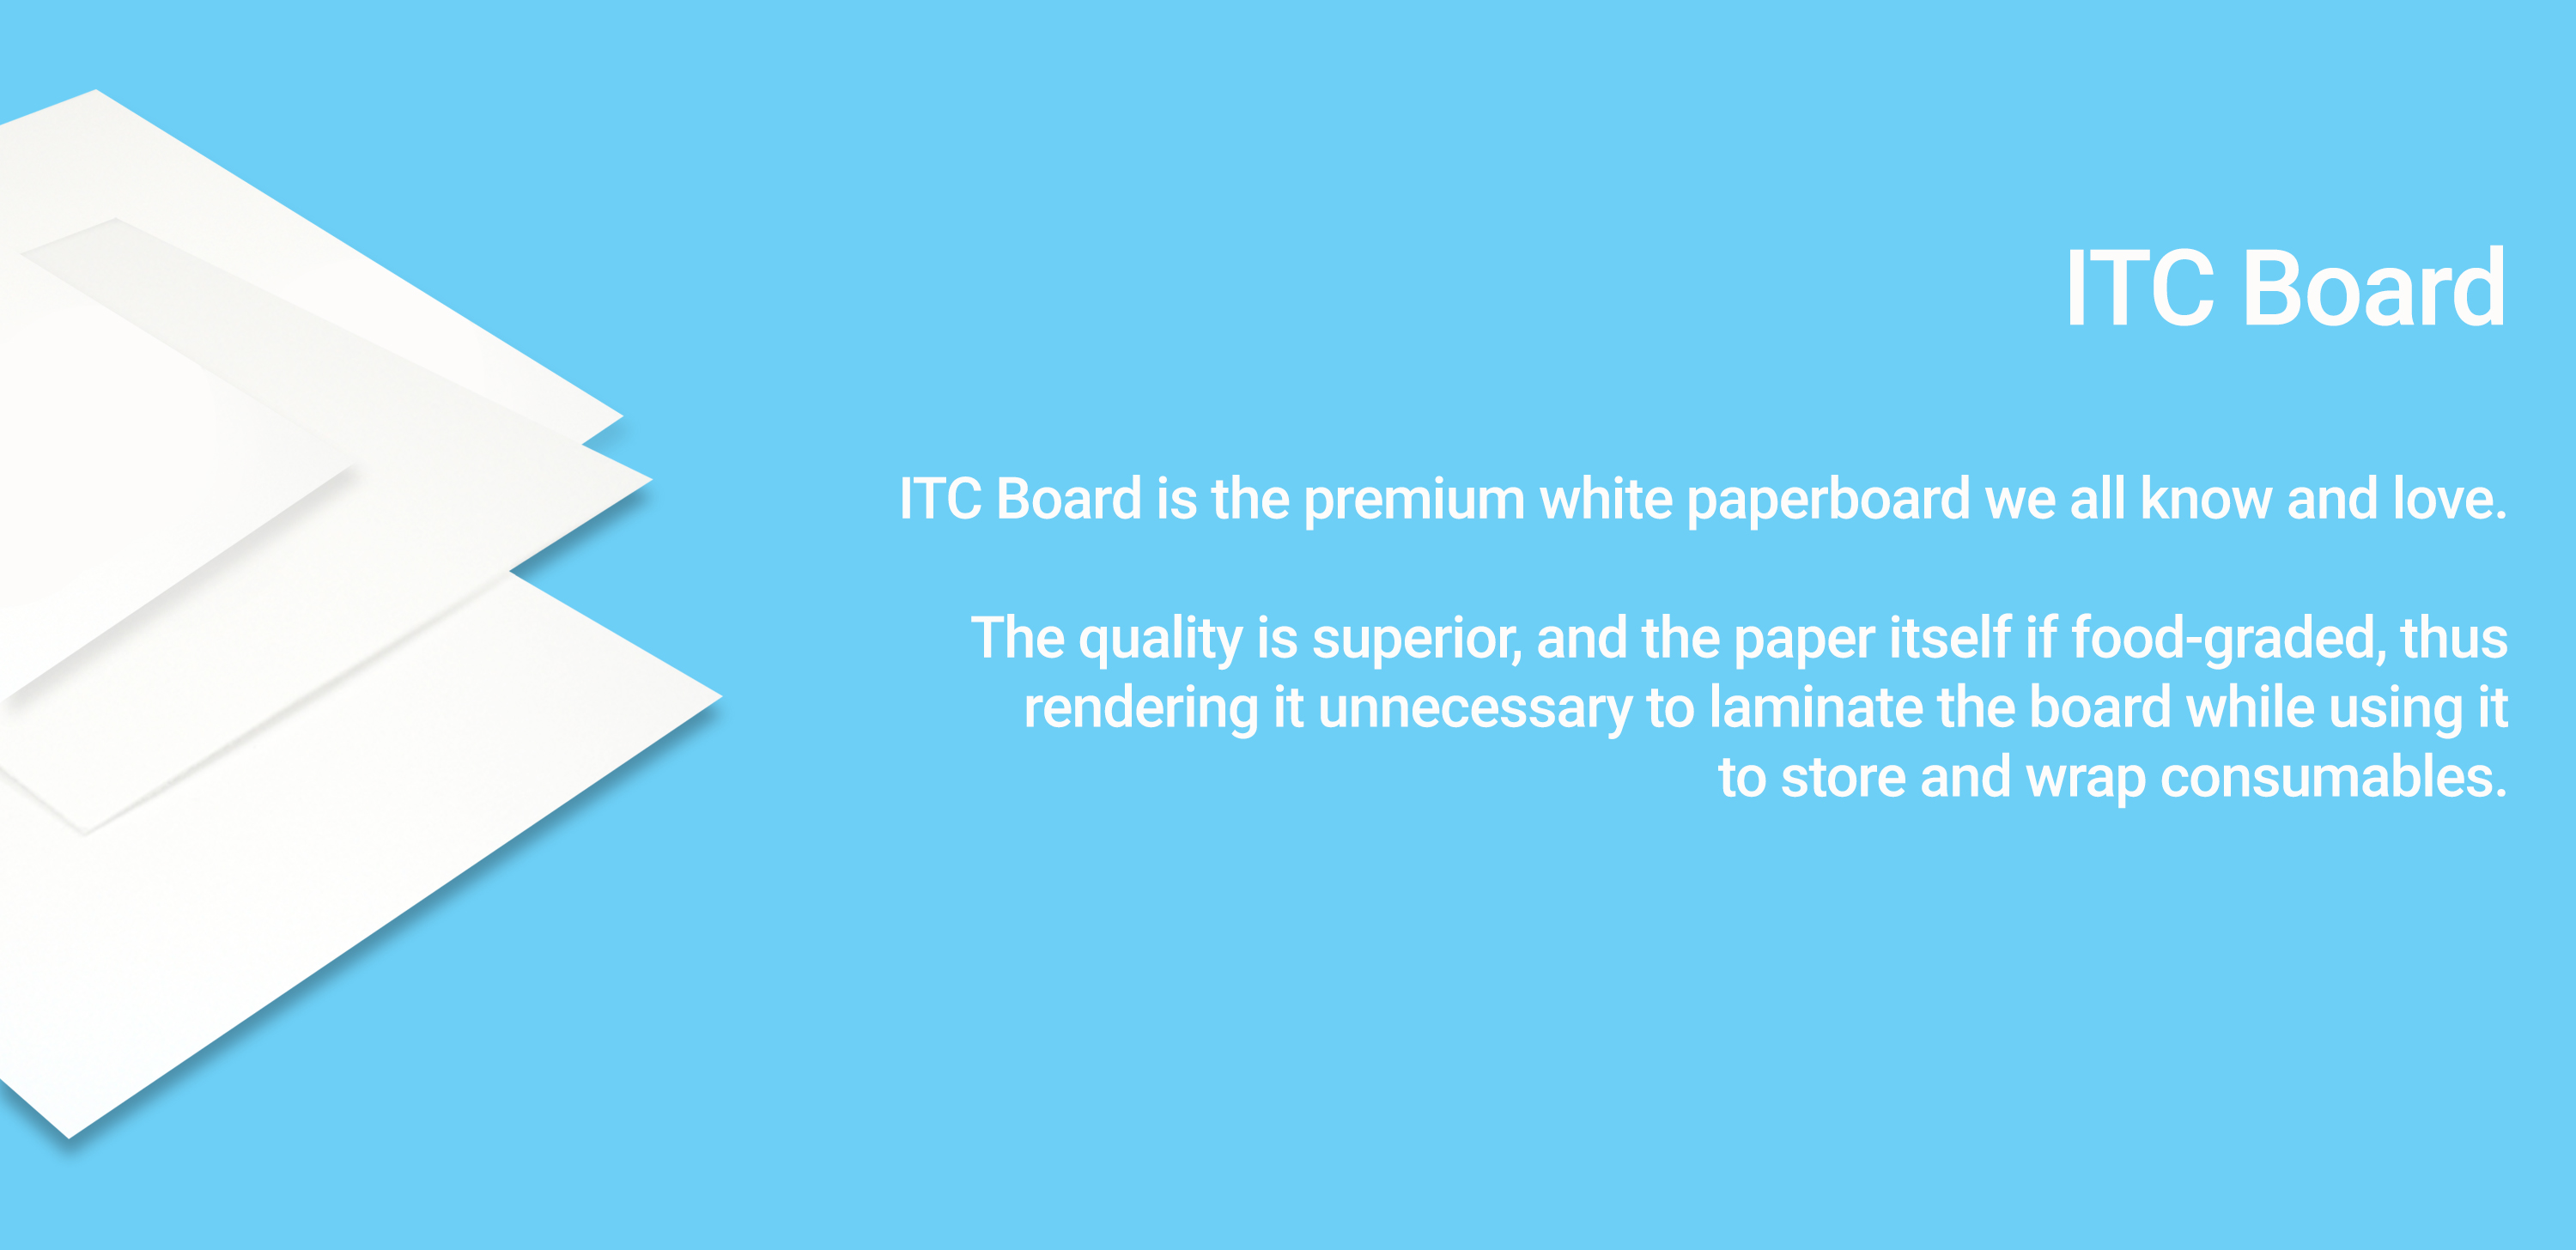 ITC Board